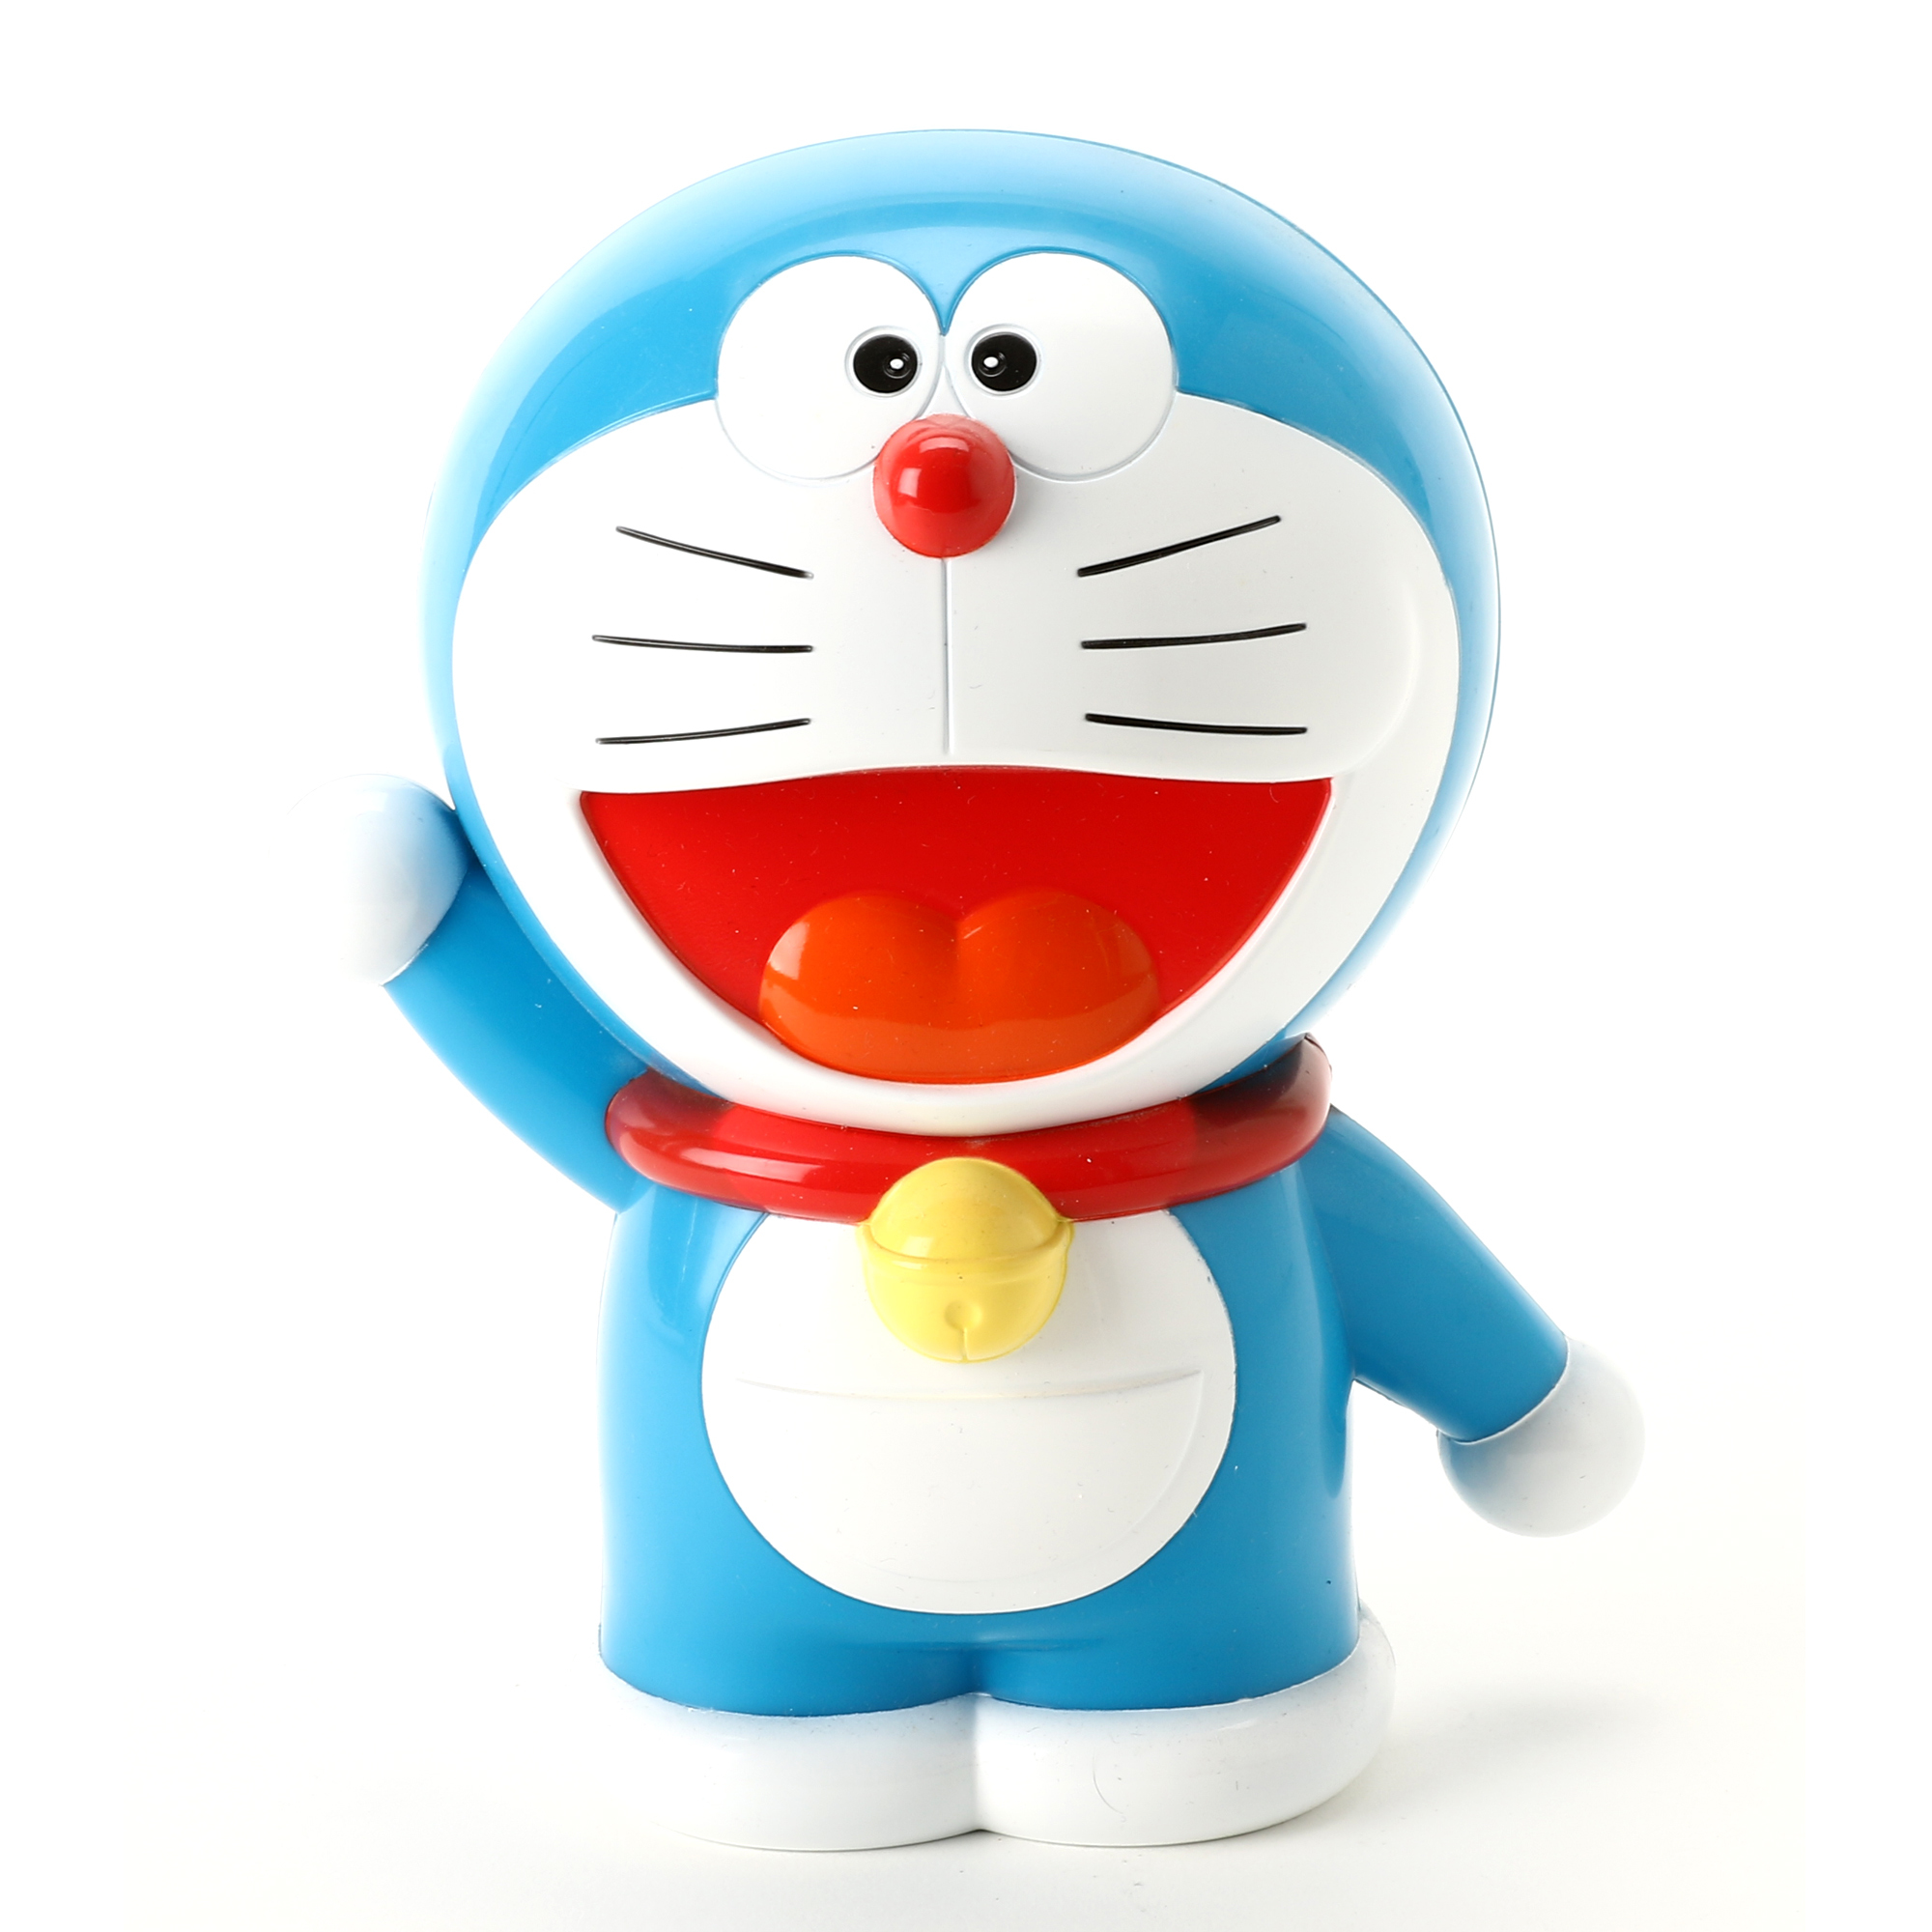  Gambar  Kartun Doraemon  3d  Kartun Kocak